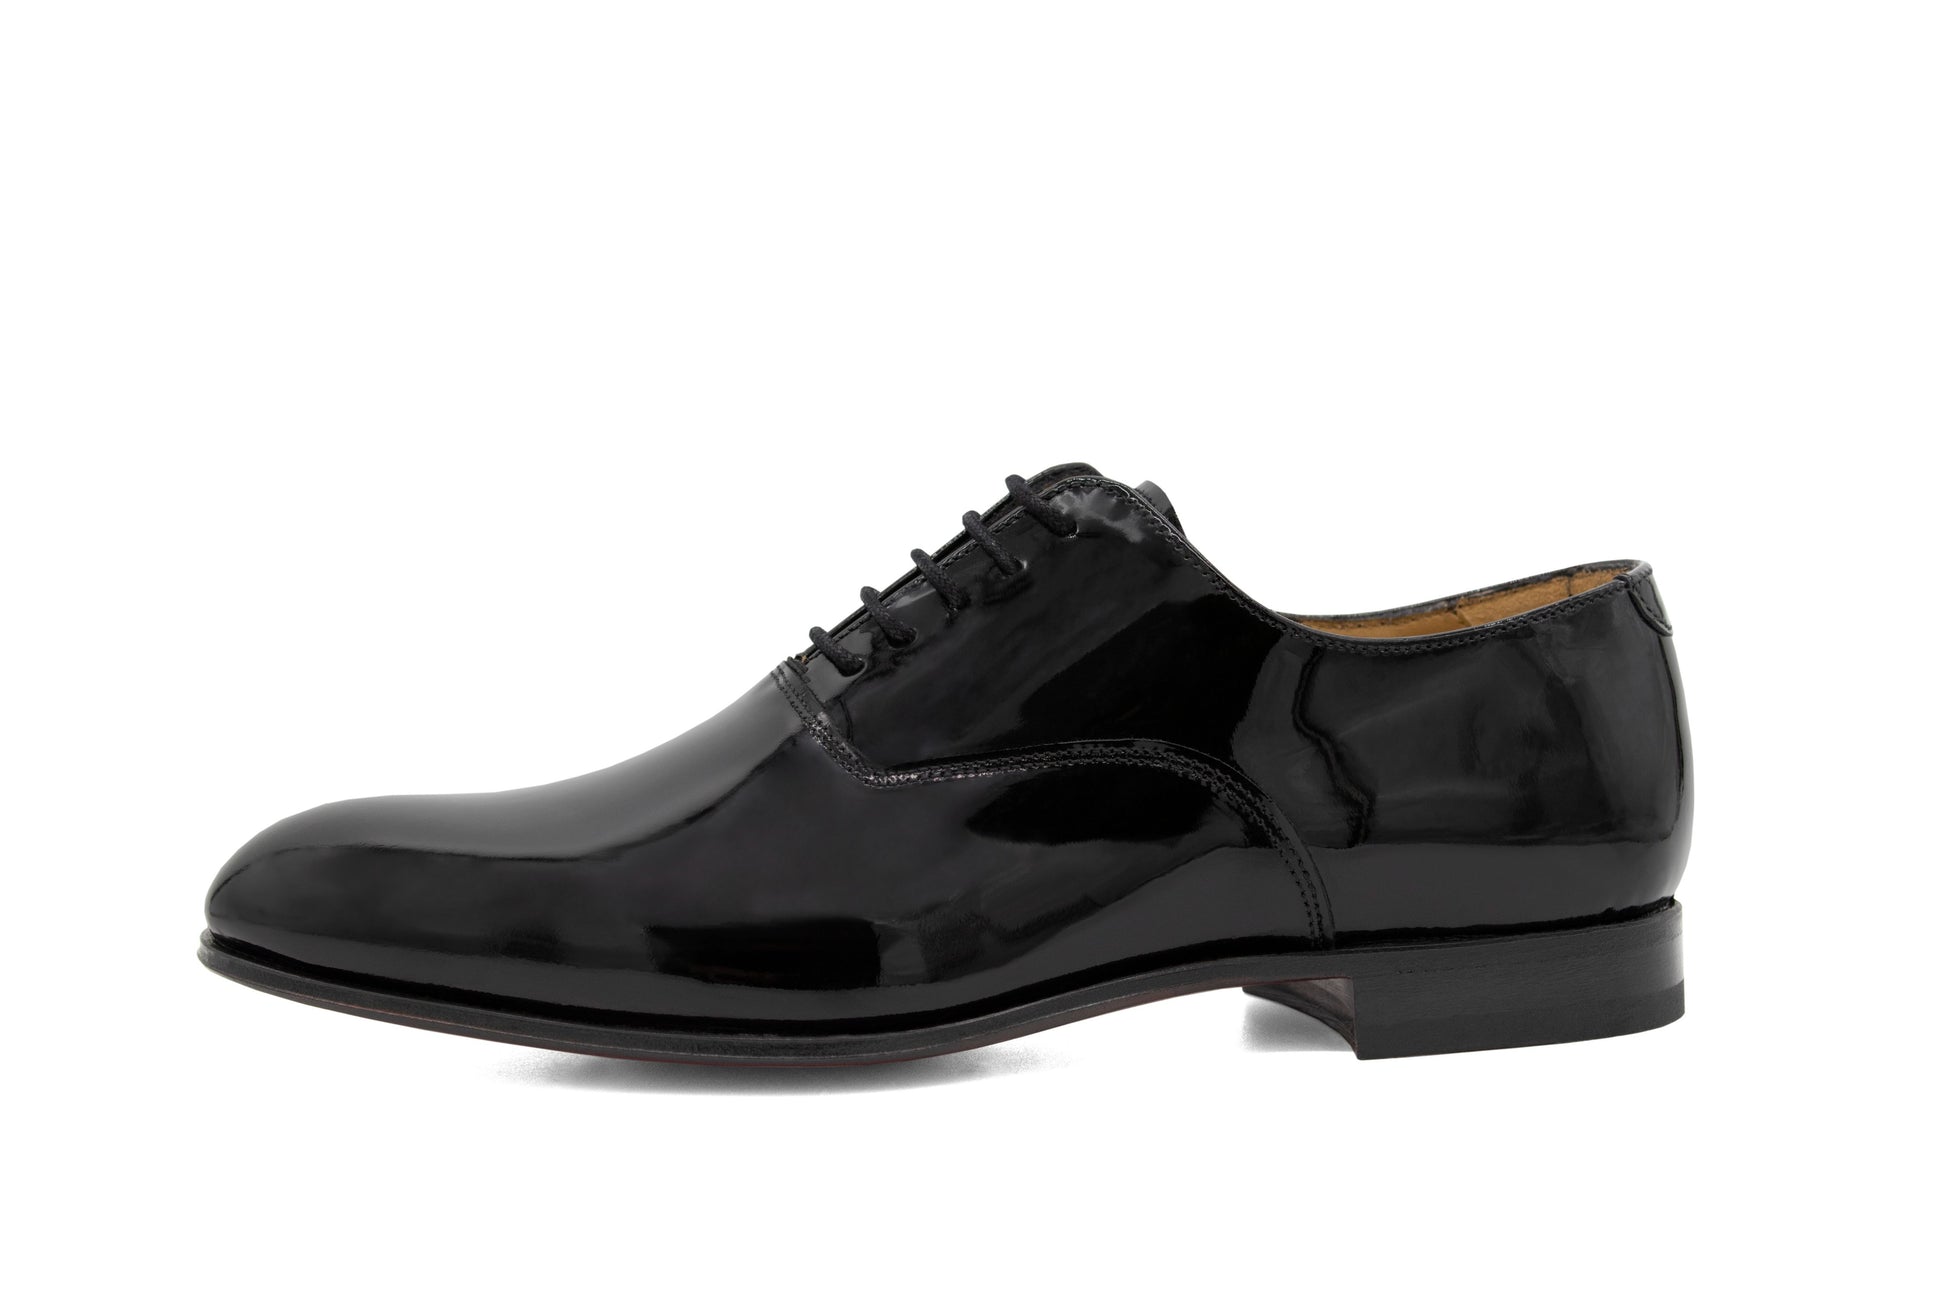 Cavalinho Patent Leather Oxford Shoes - Black - 48140003.01_4